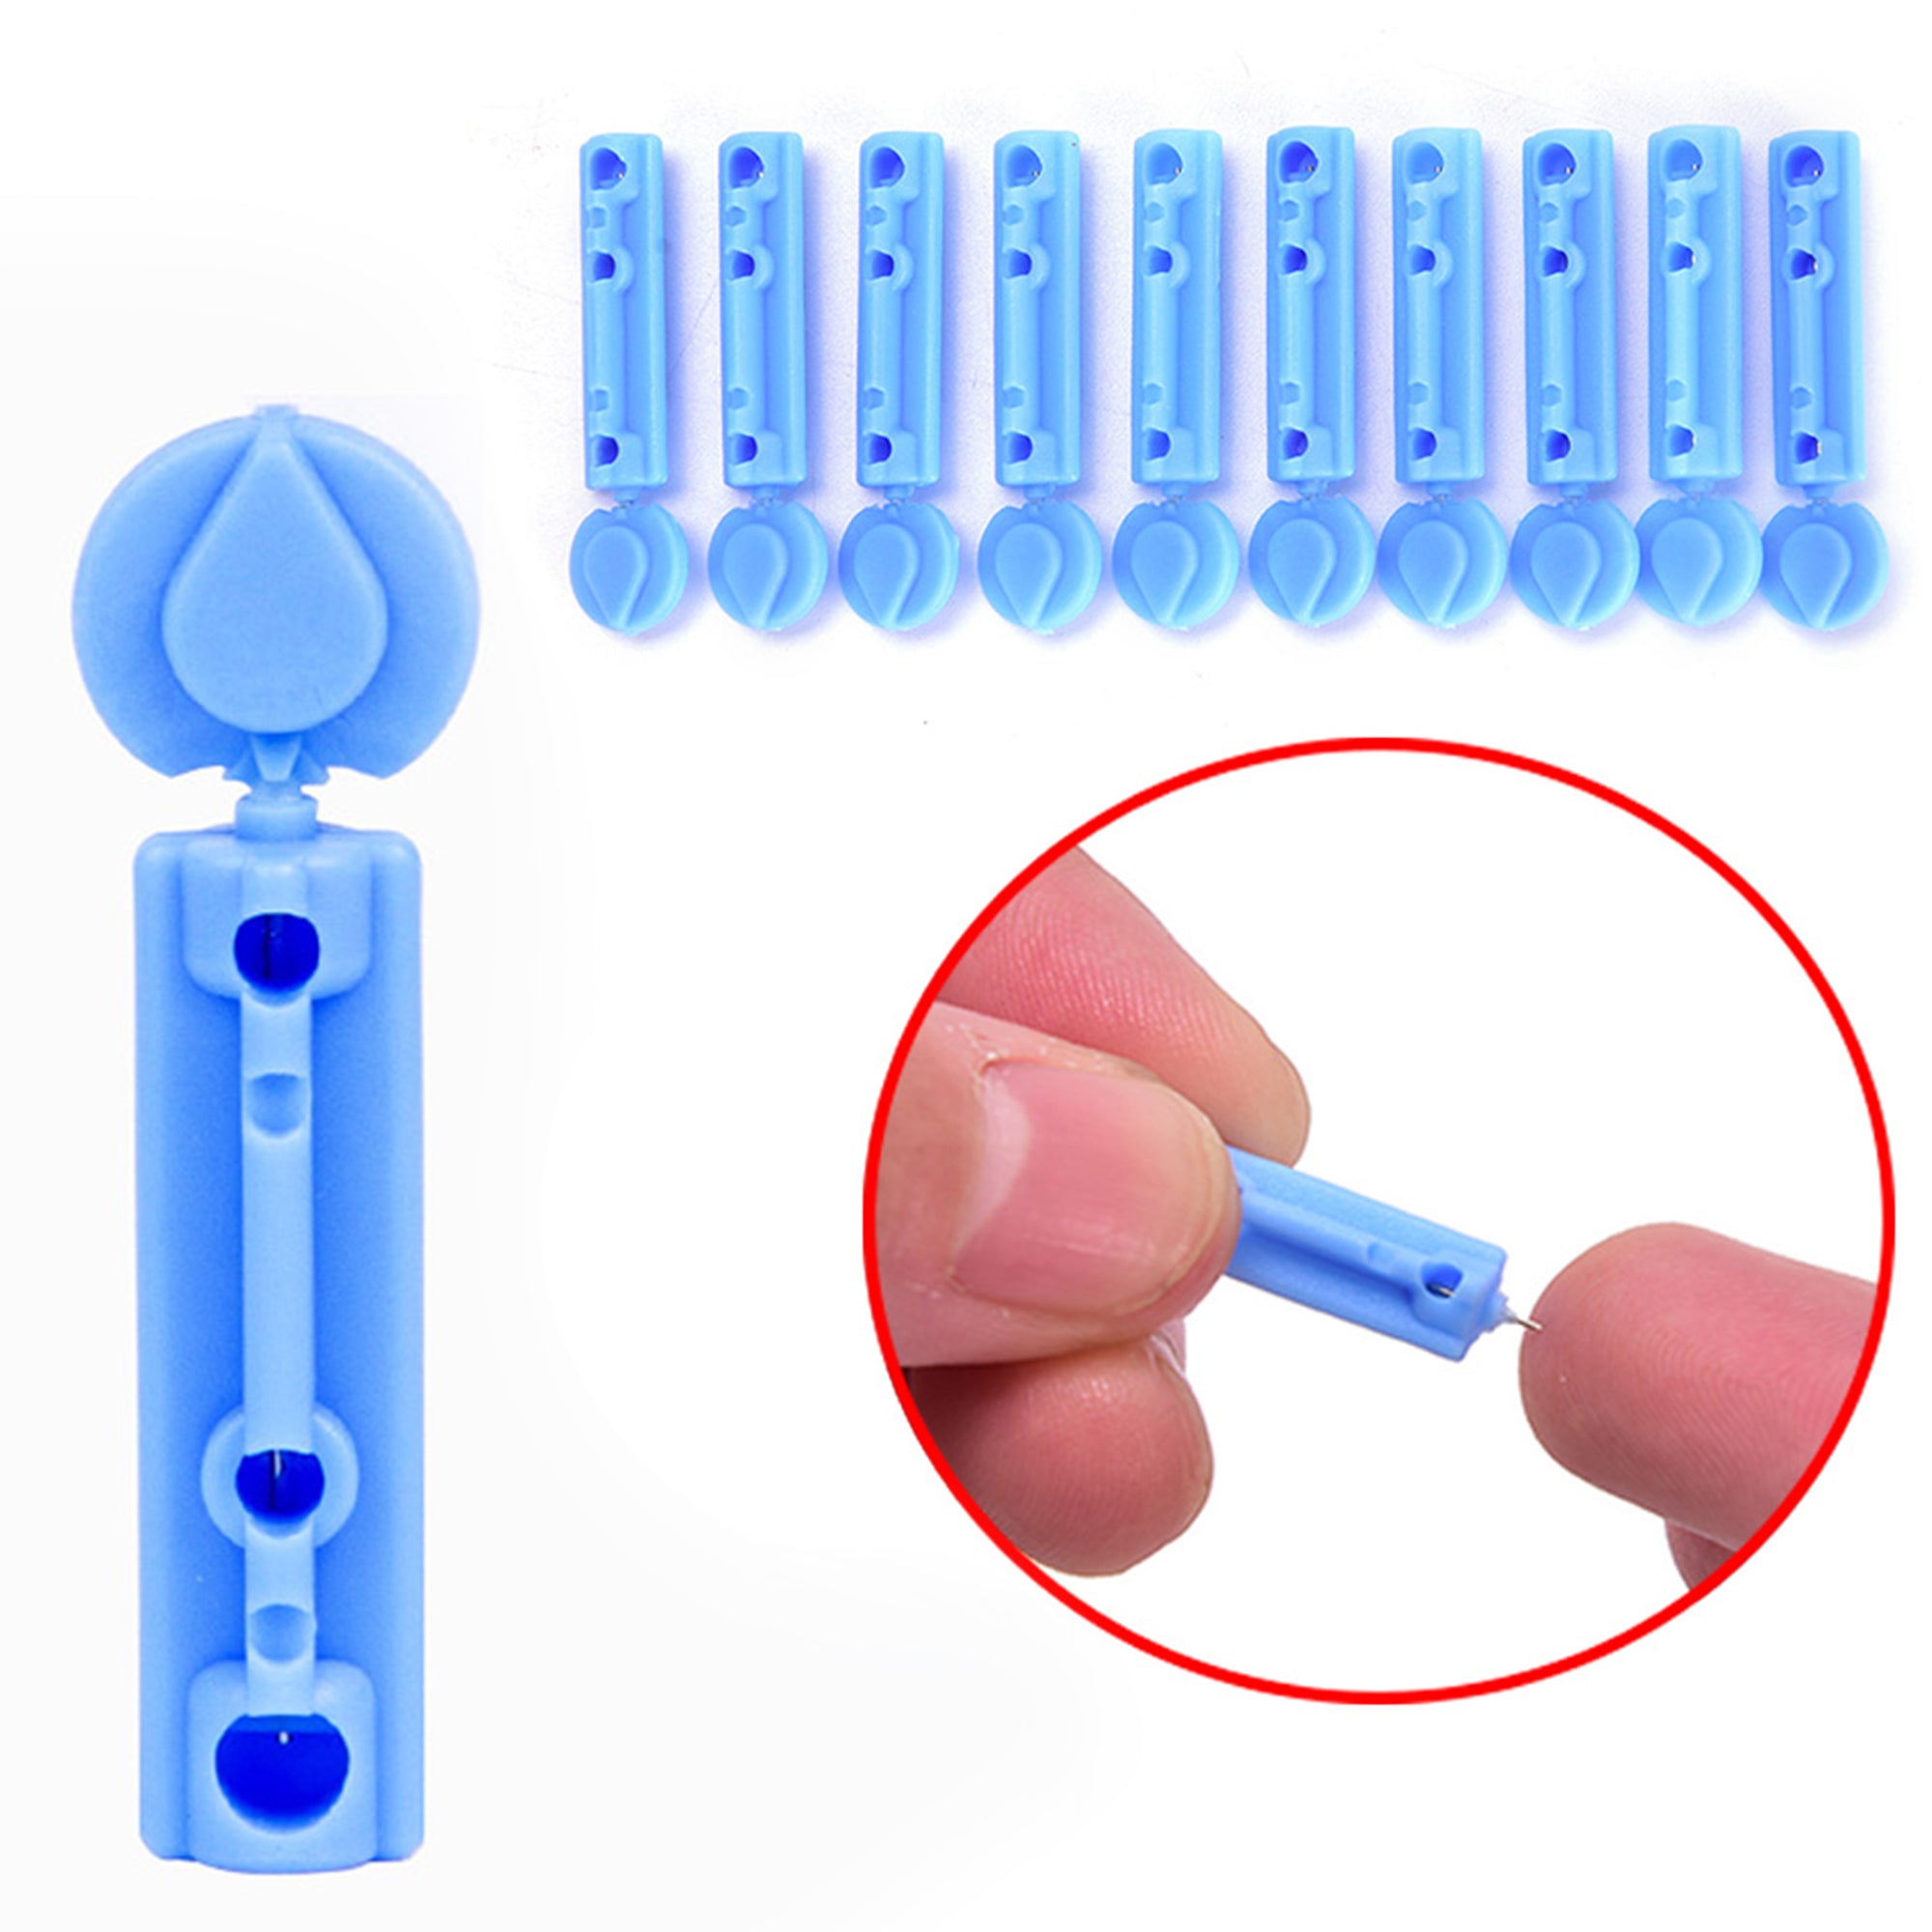 K-Life Sterile Round Glucometer lancets (100 PCS), Blue